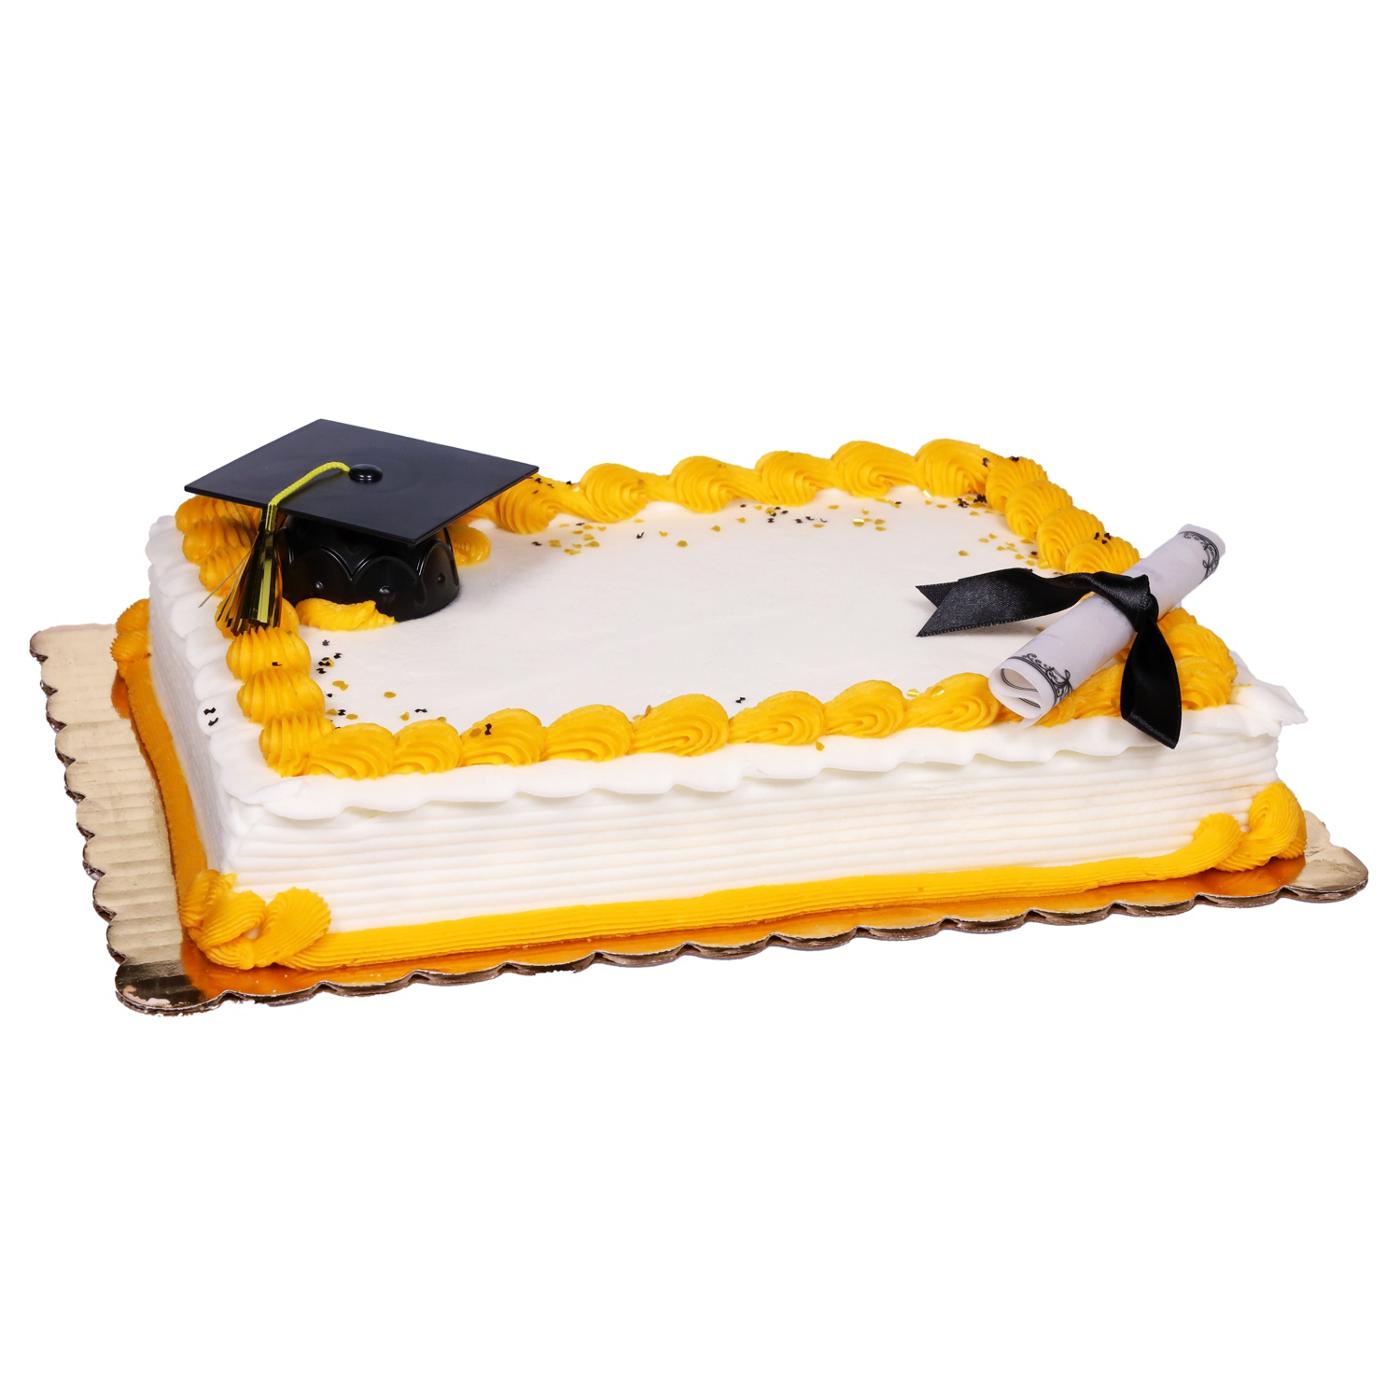 Baker Maid Graduation Buttercream White Cake; image 2 of 2